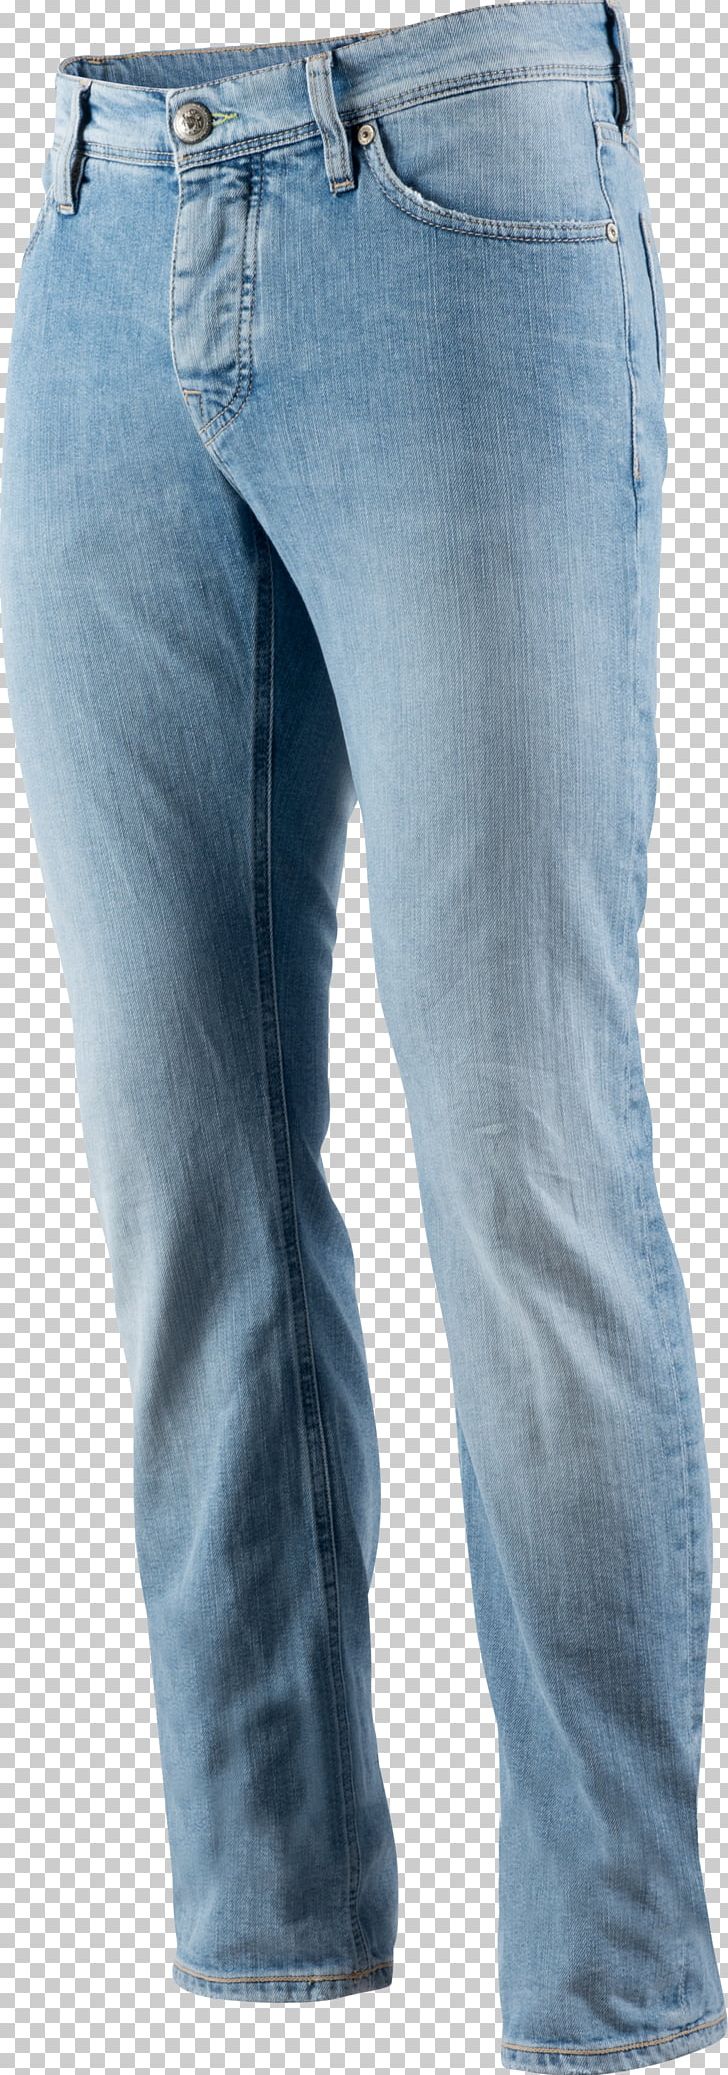 Jeans Denim Pants Microsoft Azure PNG, Clipart, Clothing, Denim, Jeans, Microsoft Azure, Pants Free PNG Download